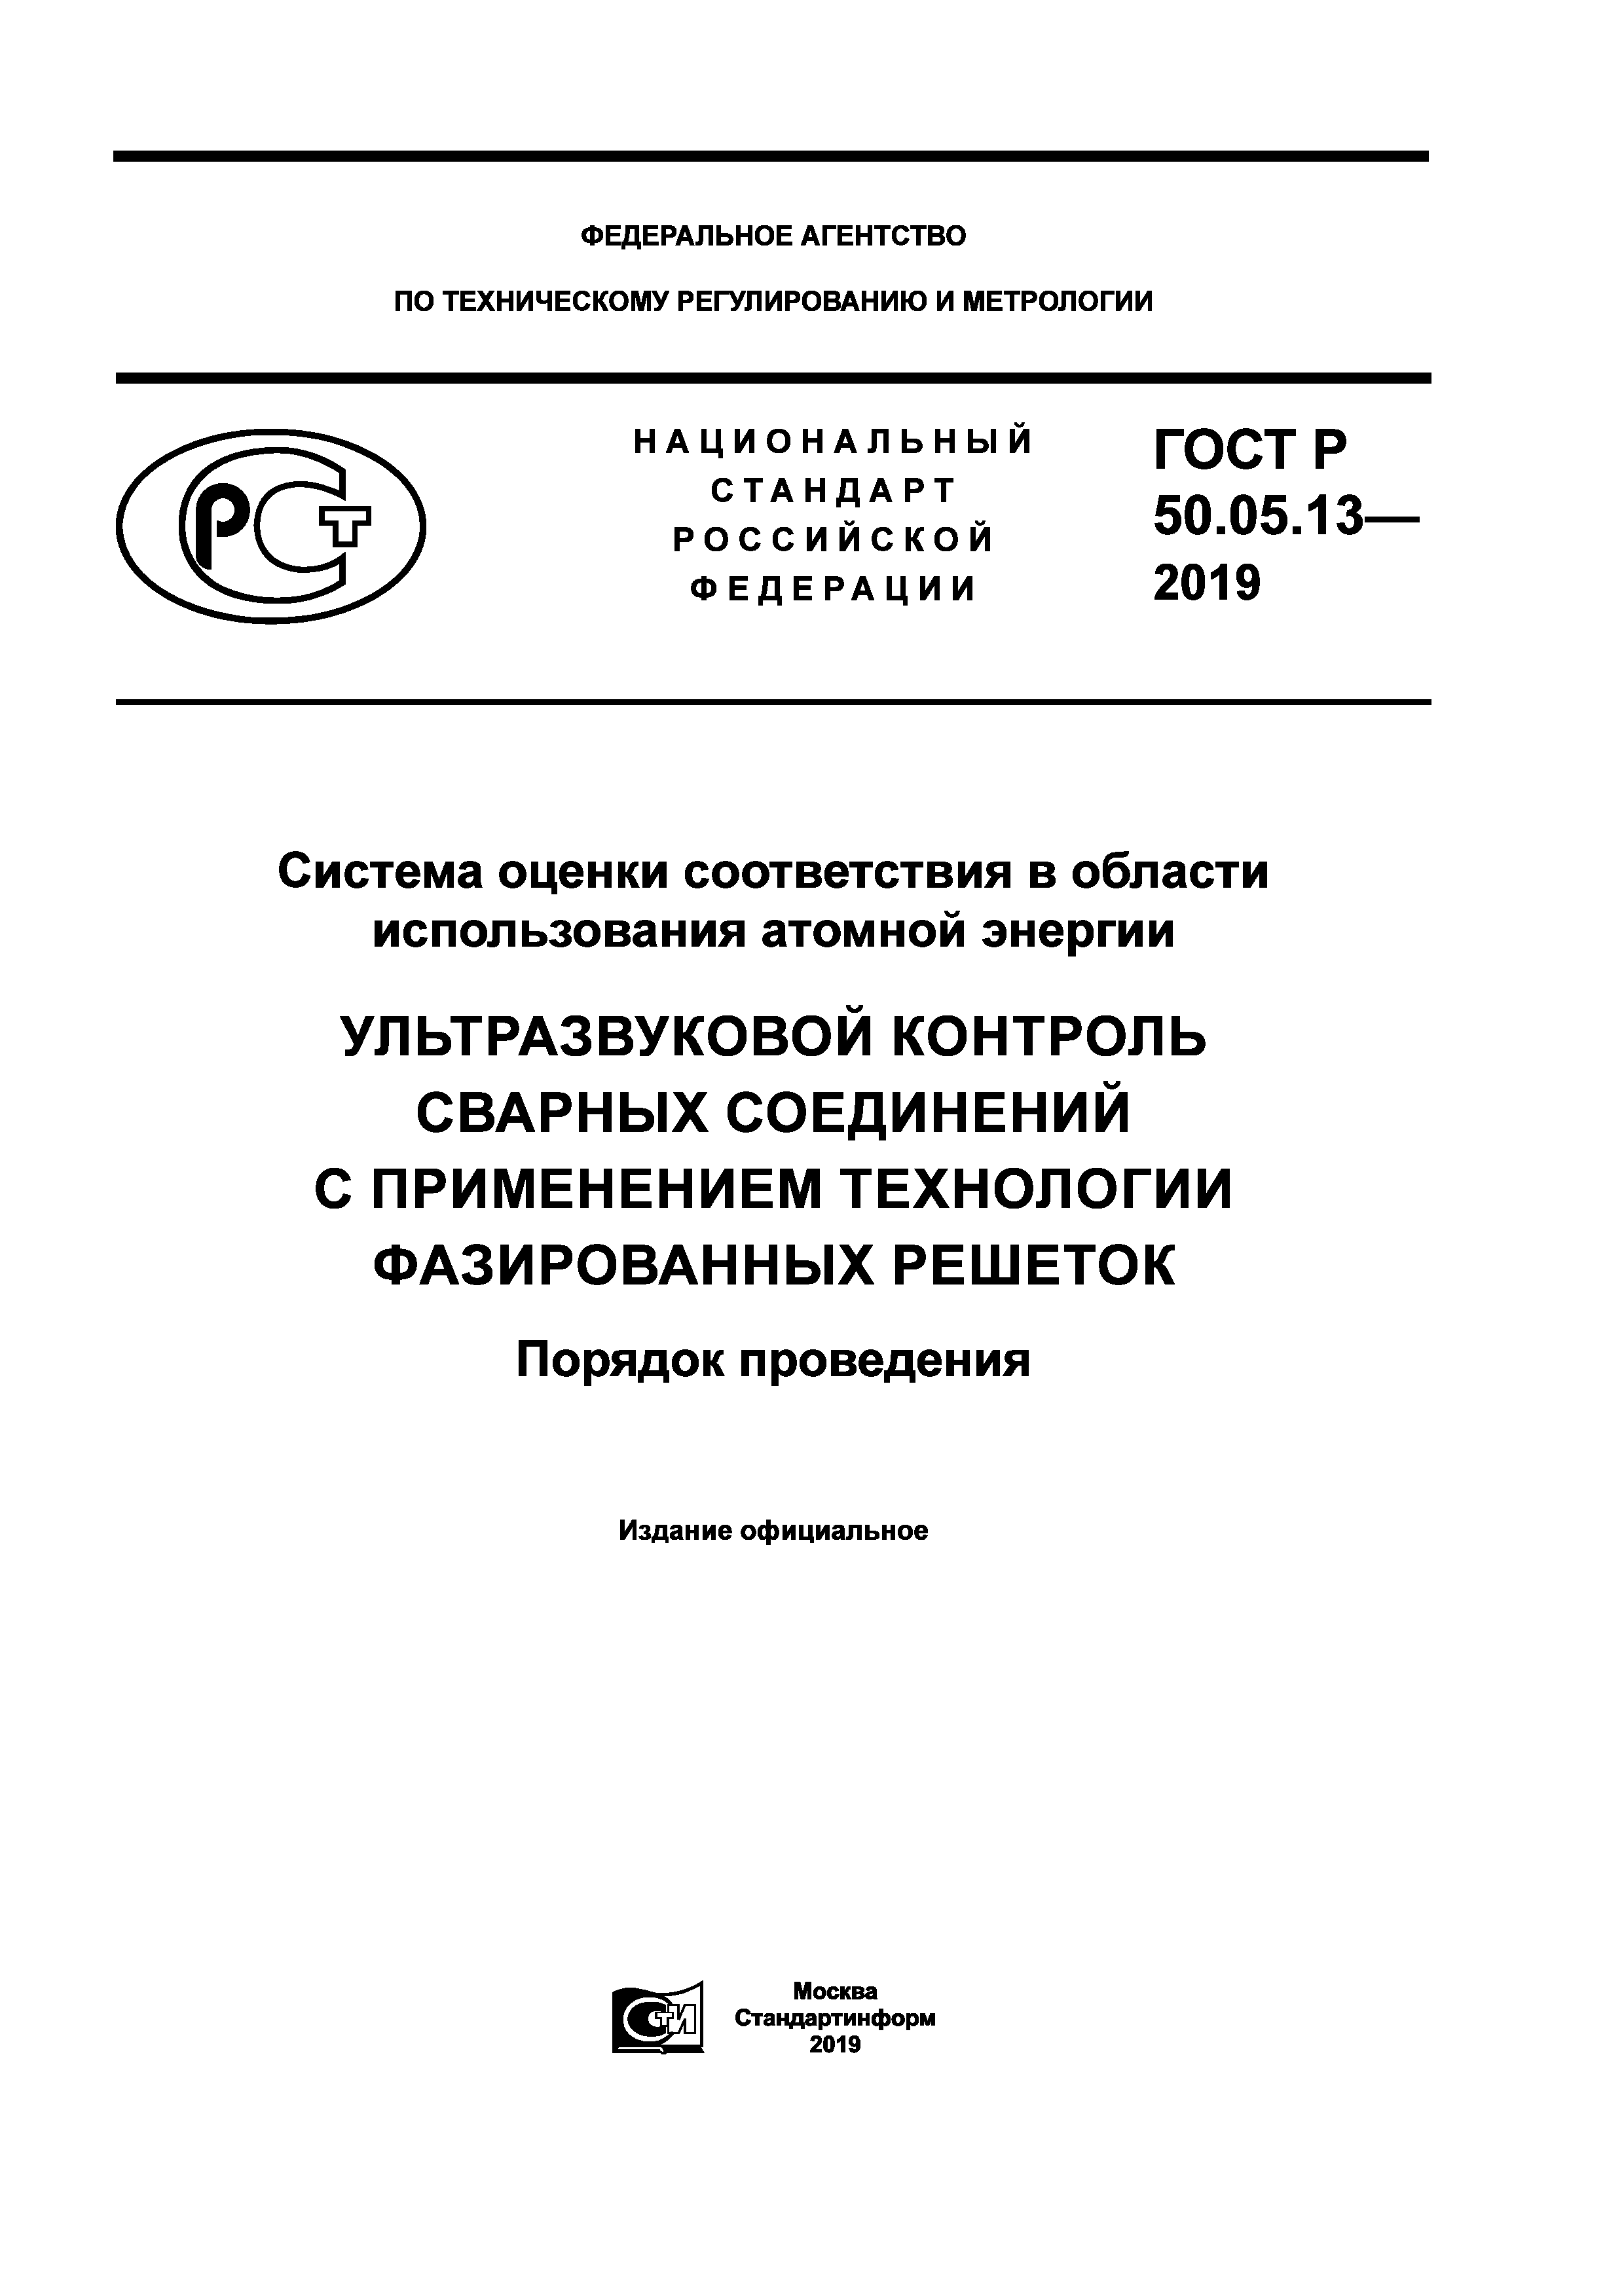 ГОСТ Р 50.05.13-2019